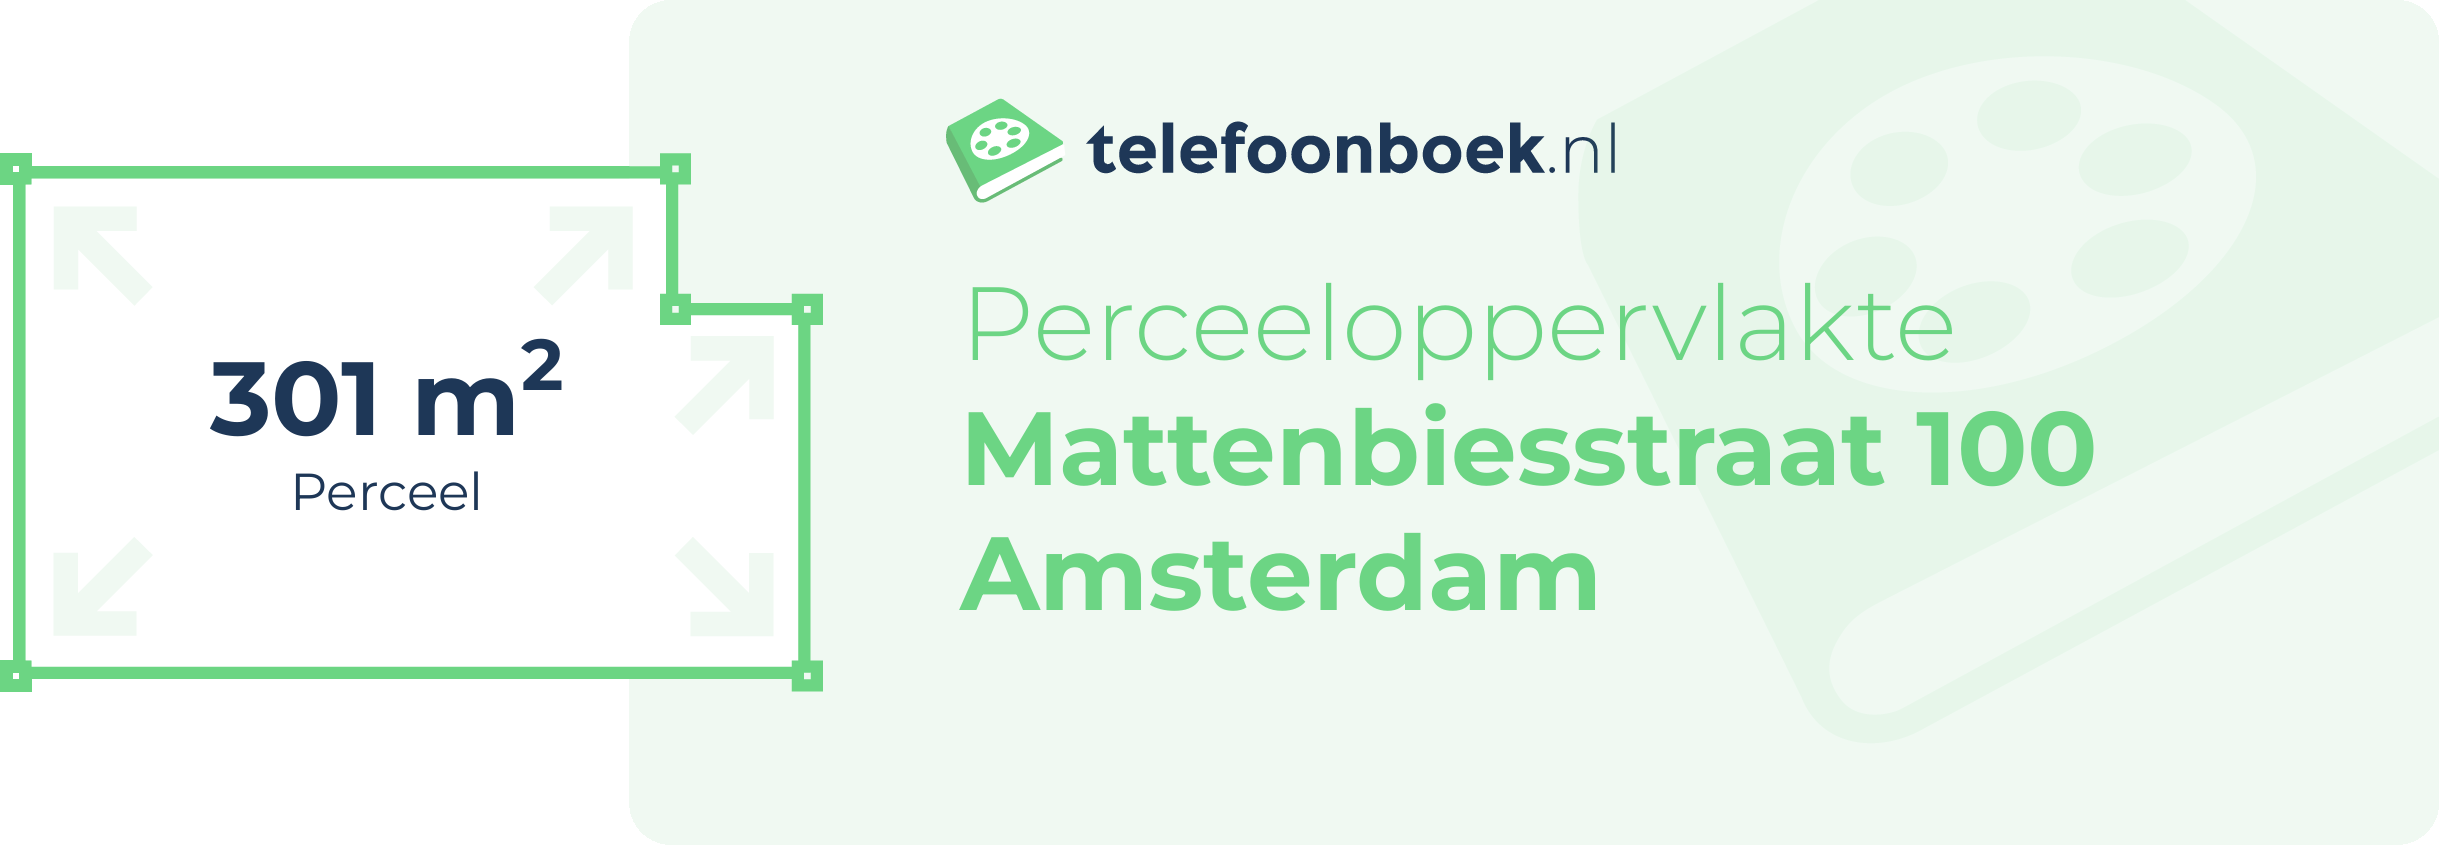 Perceeloppervlakte Mattenbiesstraat 100 Amsterdam